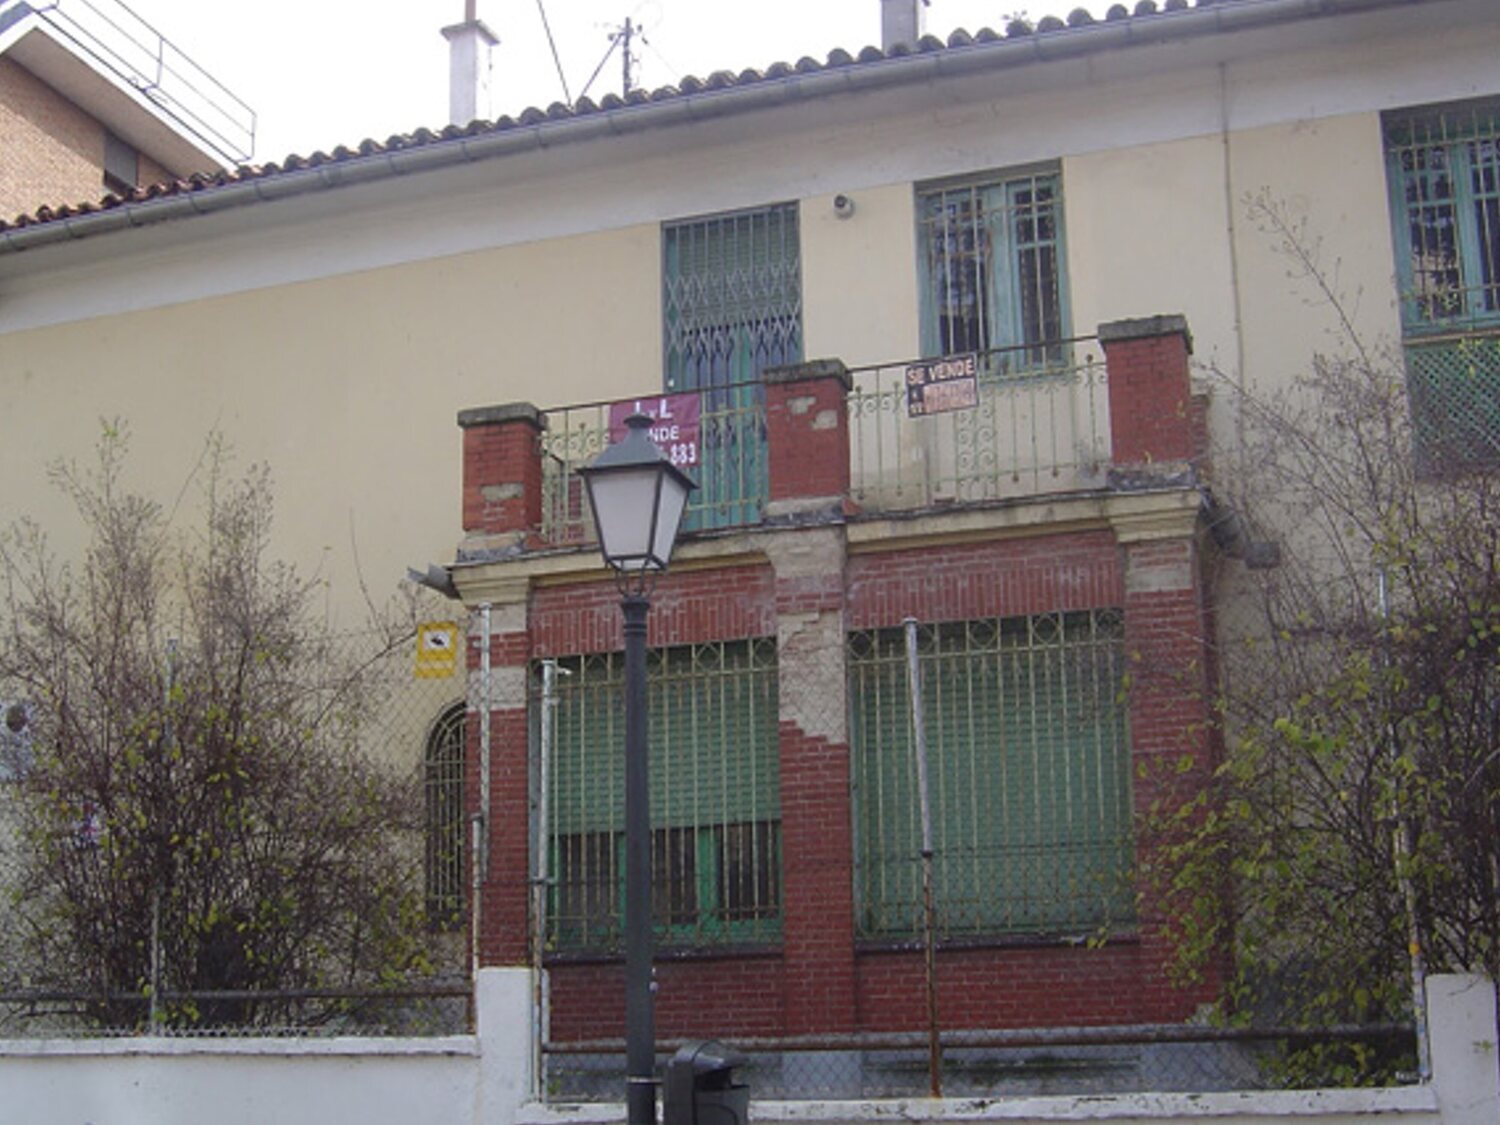 Sale a subasta la vivienda del poeta Vicente Aleixandre en Madrid